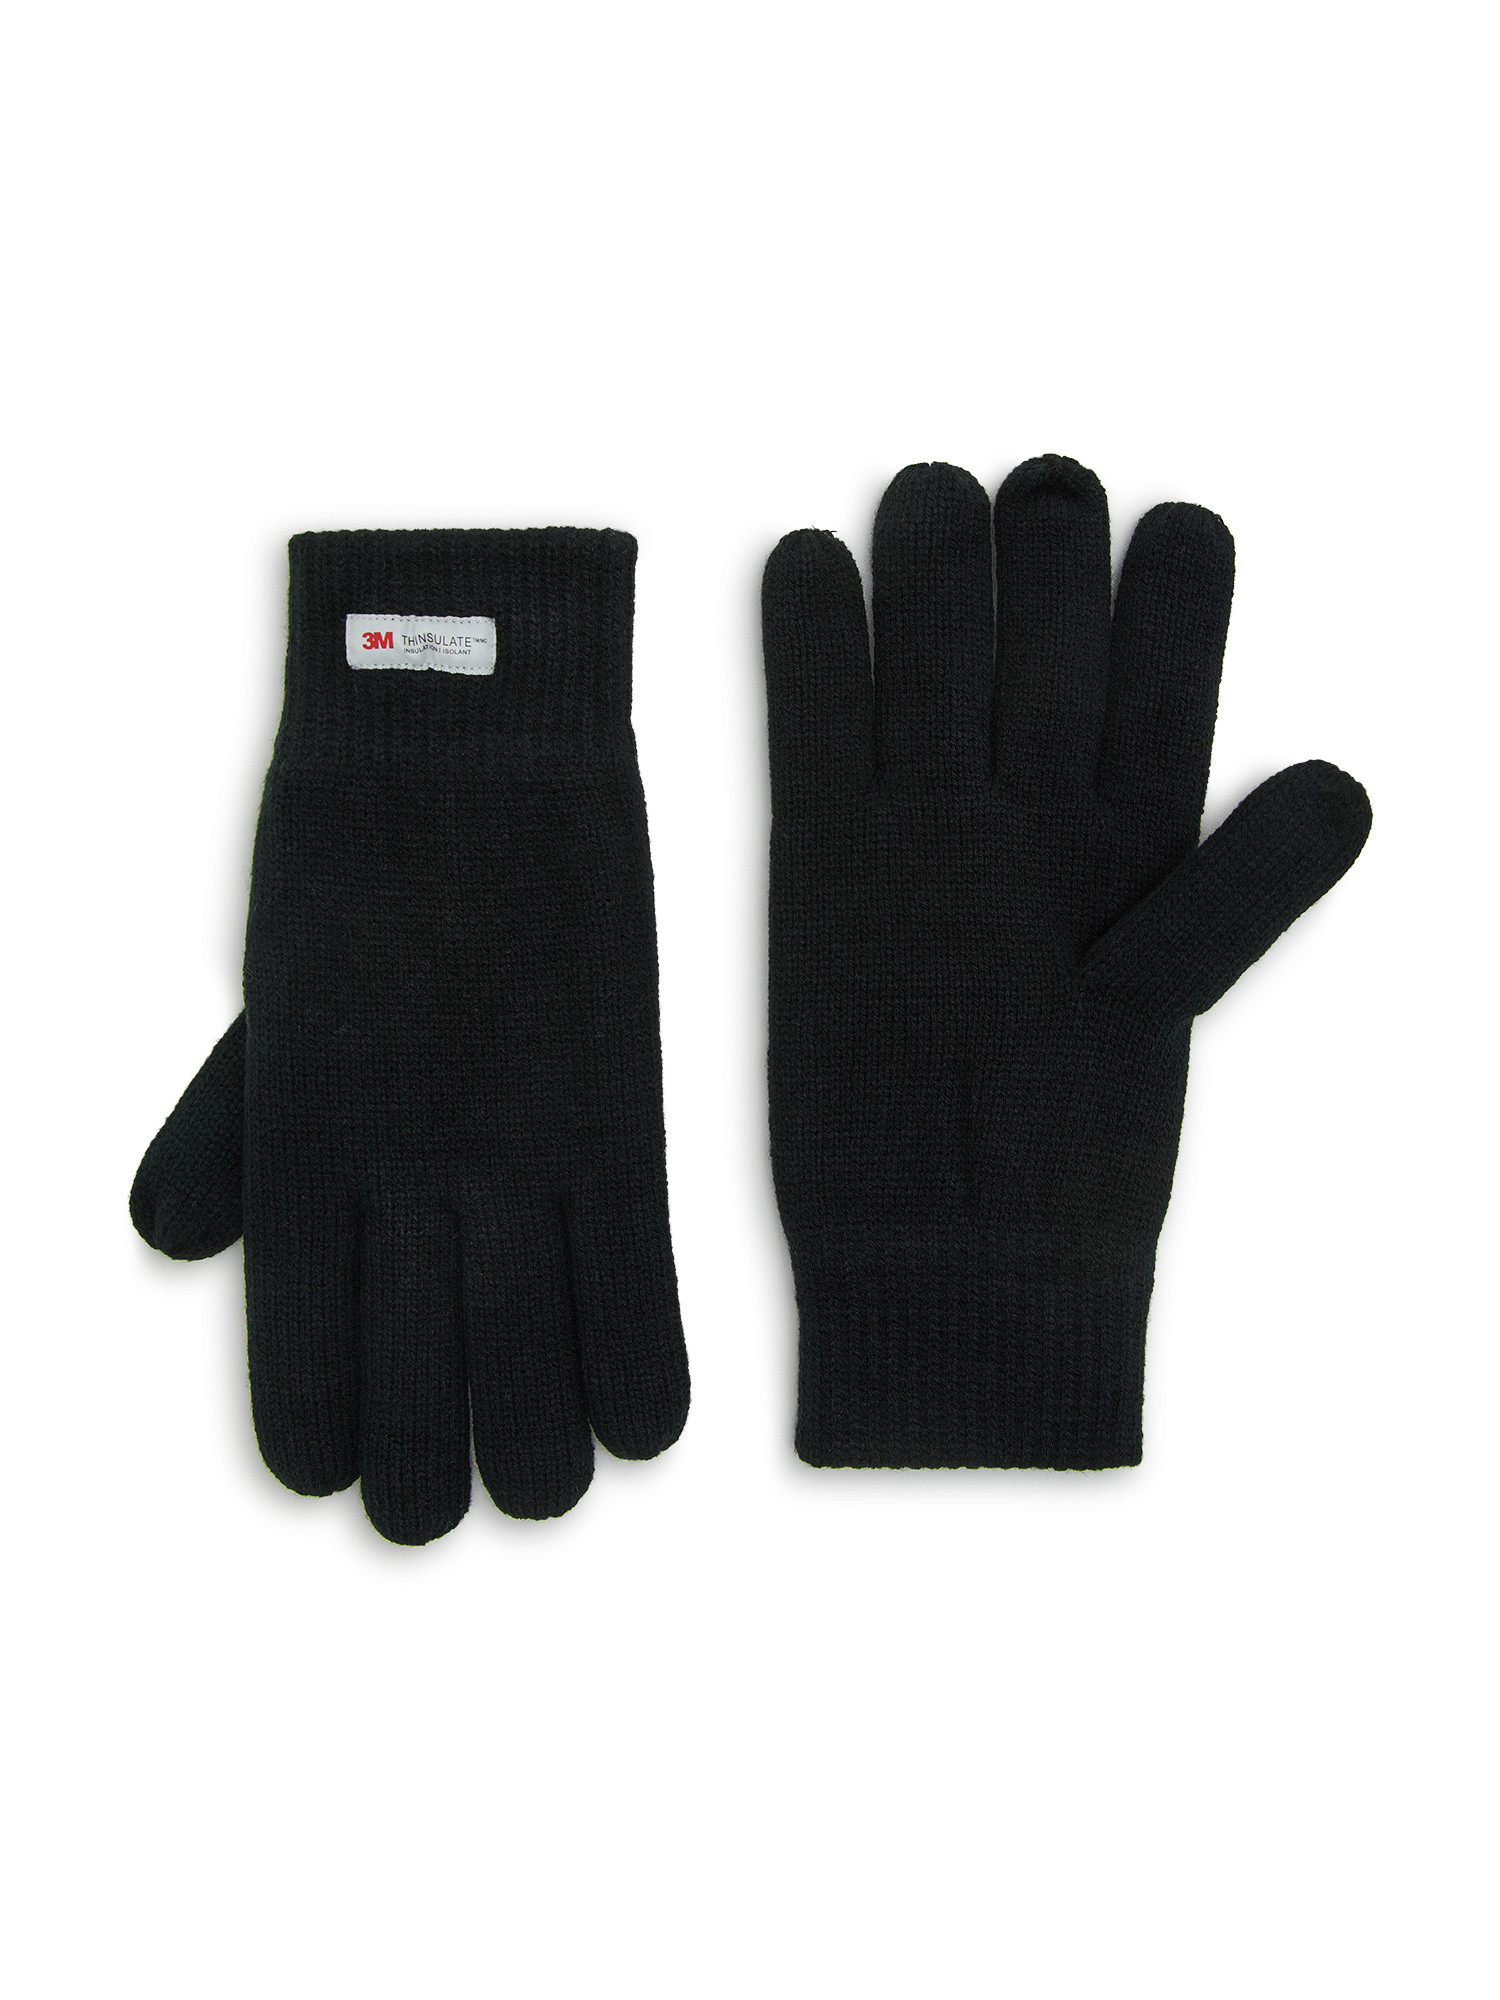 Luca D'Altieri - Knitted gloves, Black, large image number 0